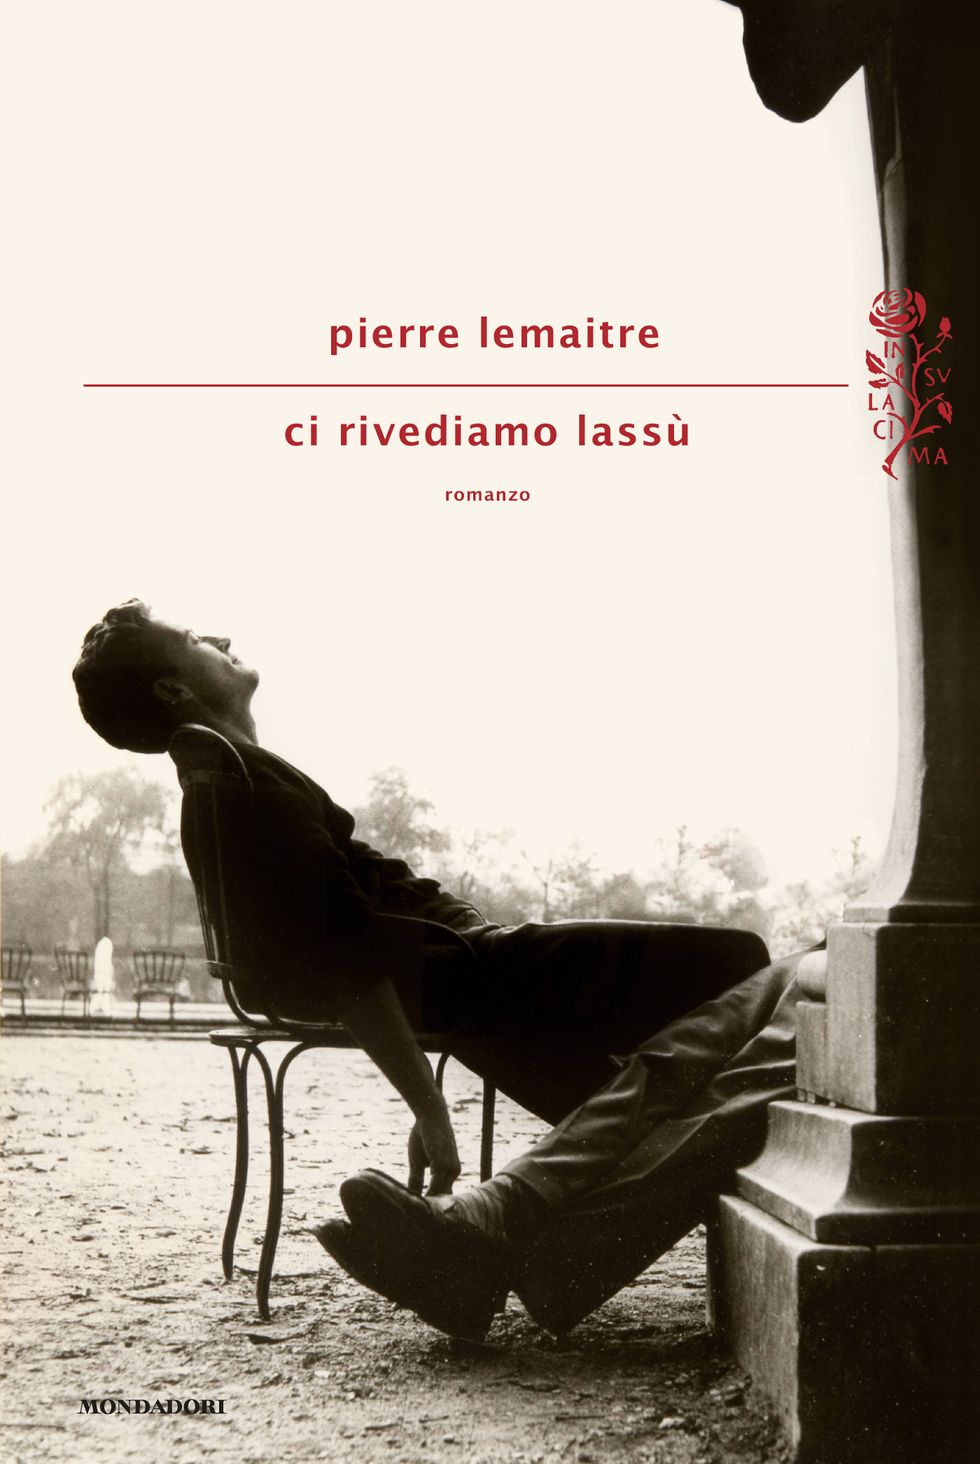 Pierre Lemaitre, "Ci rivediamo lassù"